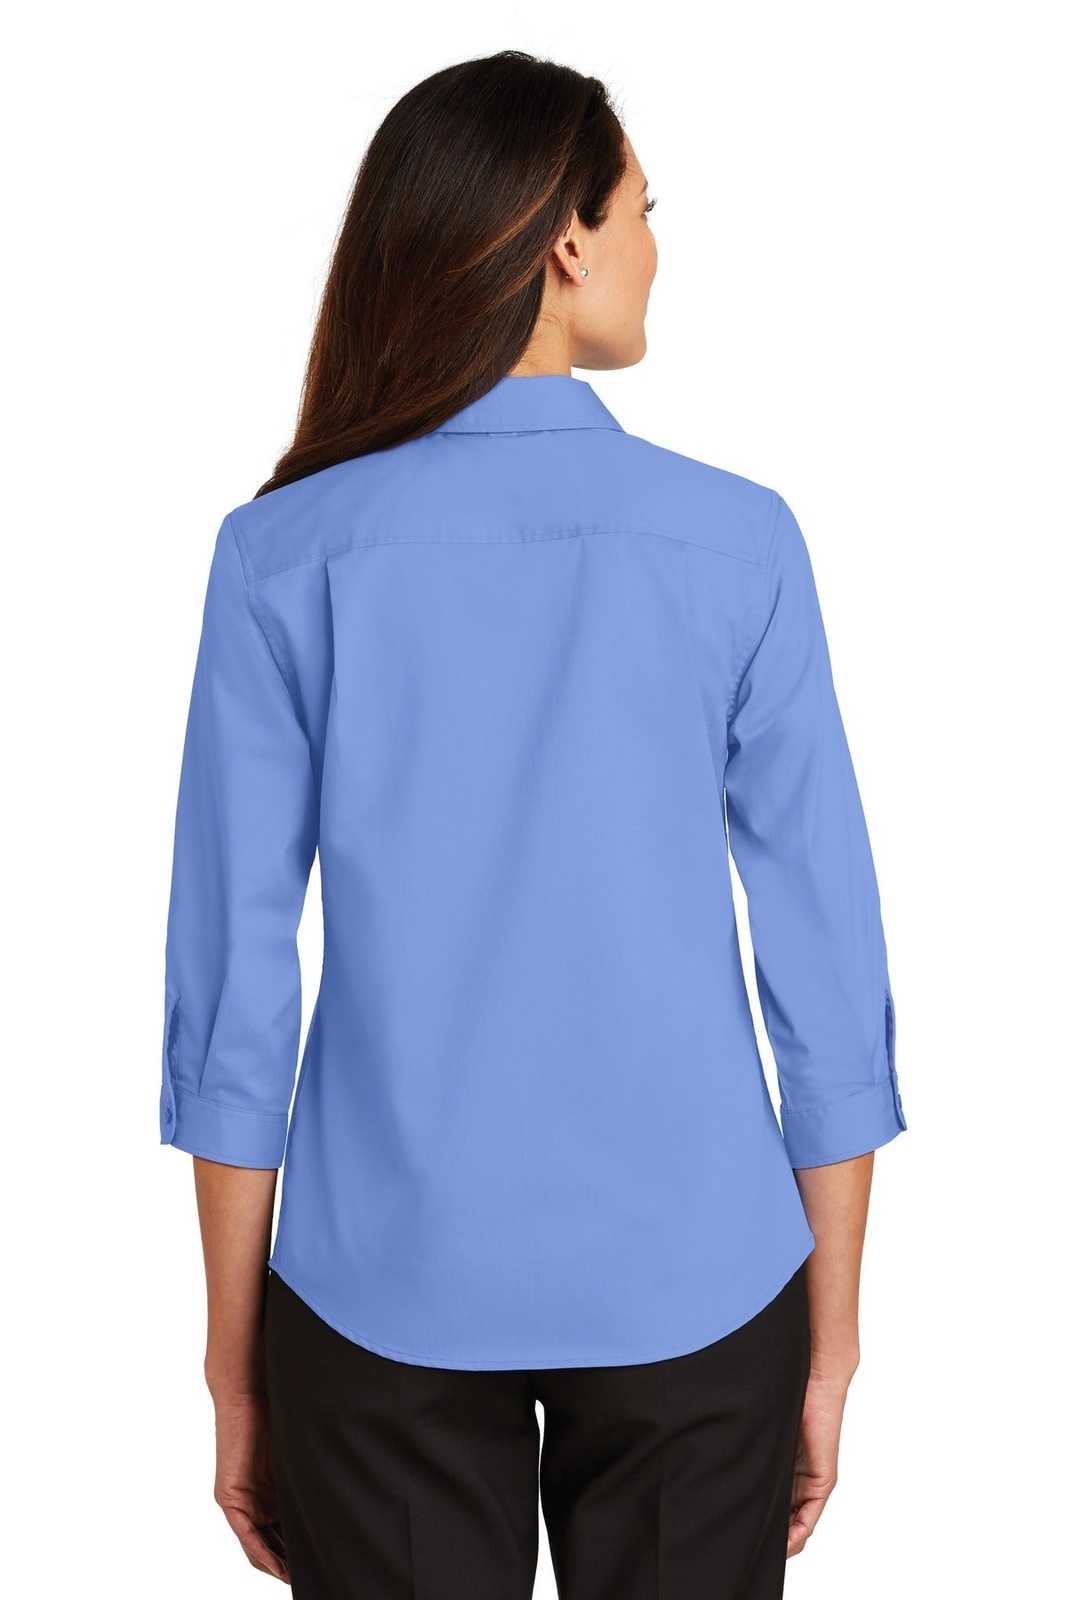 Port Authority L665 Ladies 3/4-Sleeve Superpro Twill Shirt - Ultramarine Blue - HIT a Double - 2